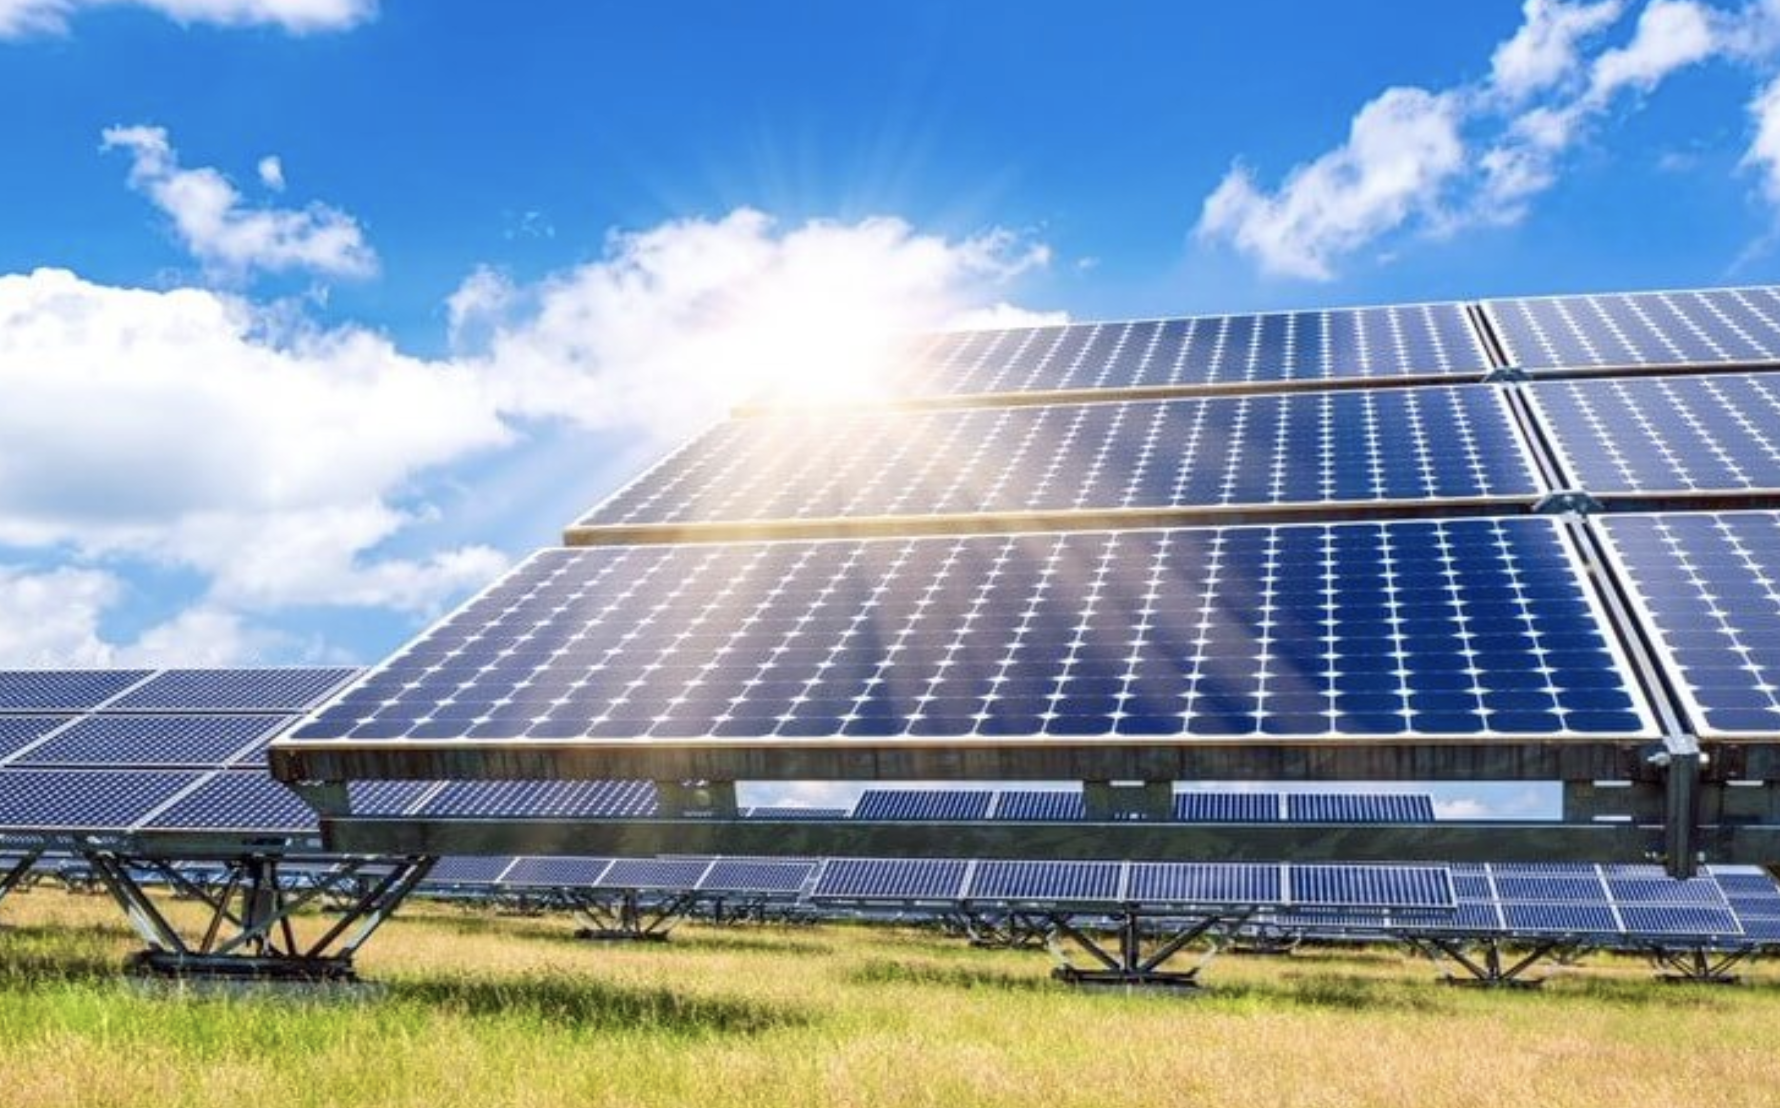 Let’s Expand Solar Farms Through the Free Market